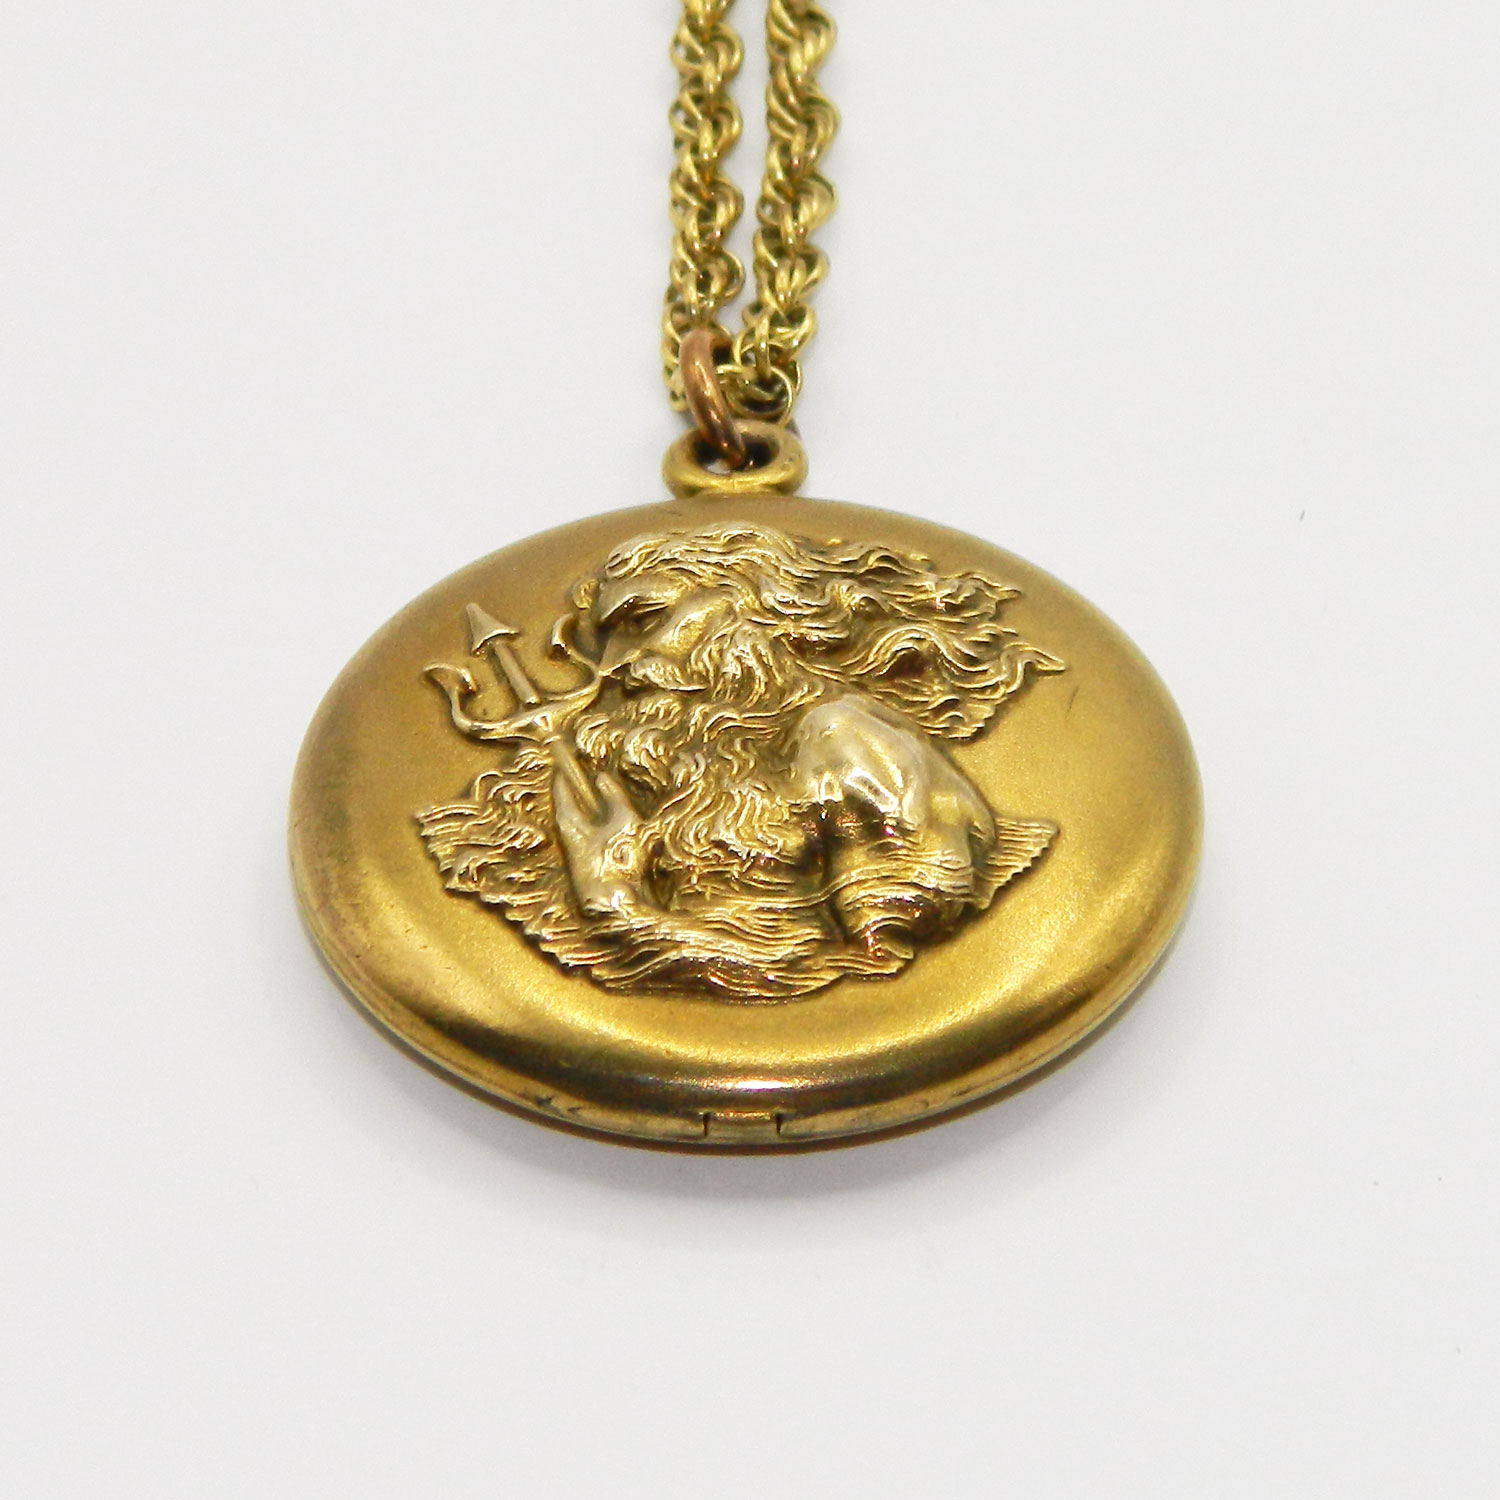 Antique Neptune locket necklace